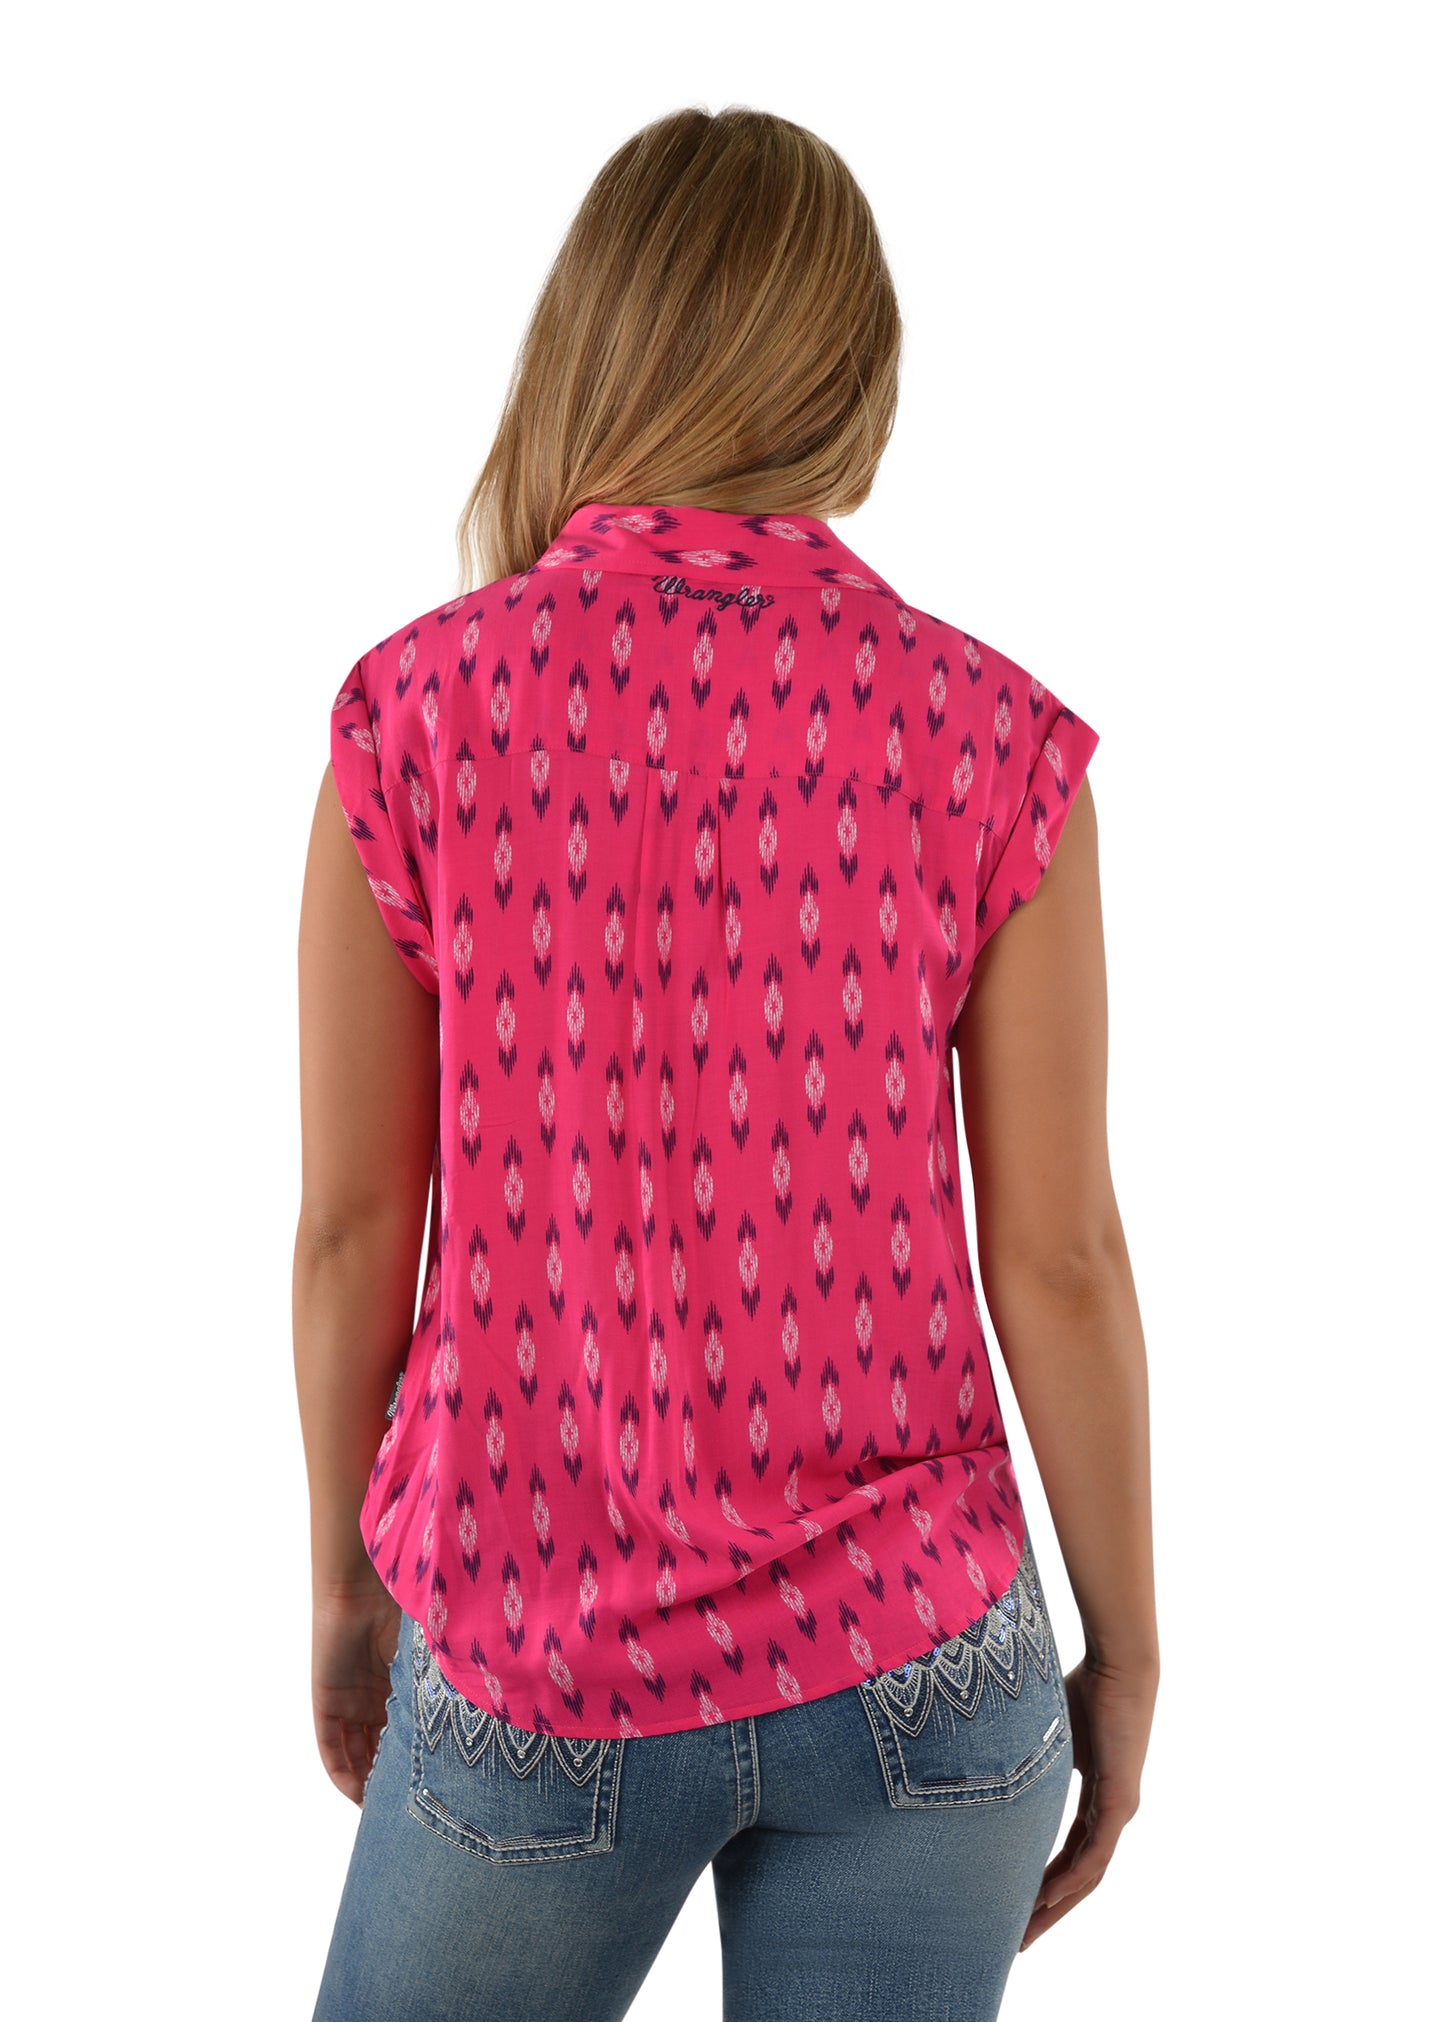 Wrangler Ladies Cybill Print Sleeveless Shirt - X1S2136708 - On Sale